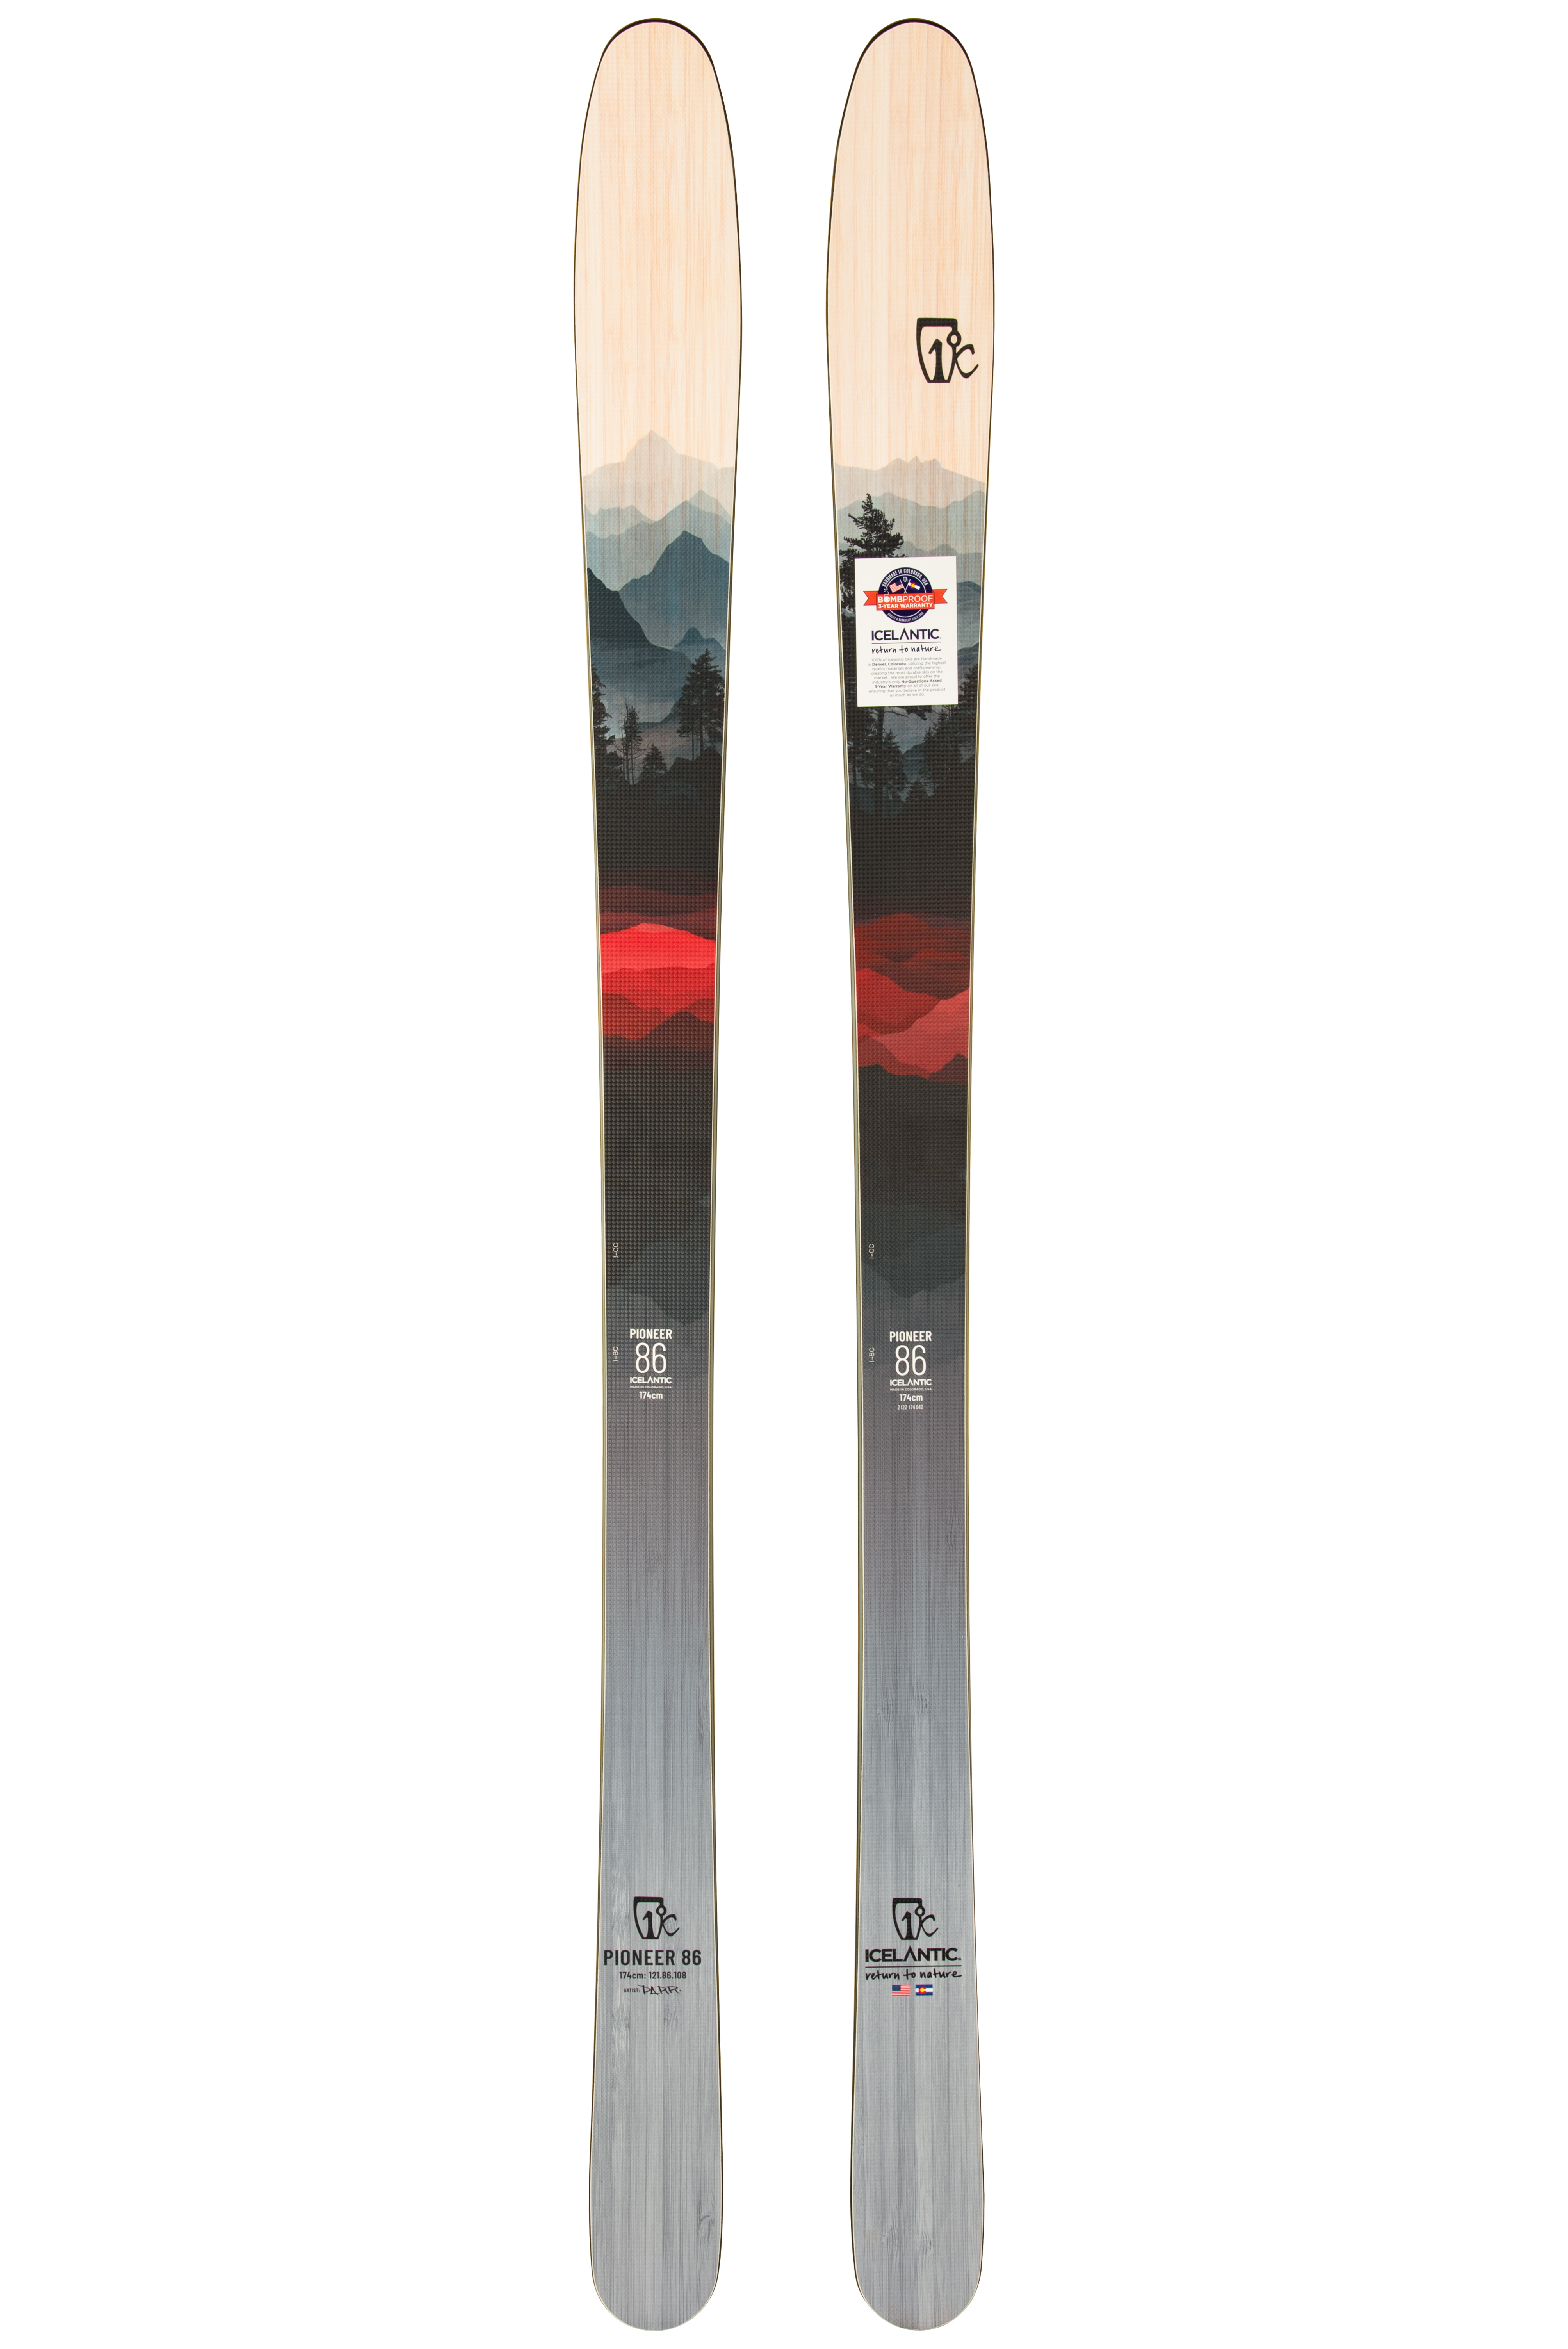 Лыжи средней жесткости Icelantic Pioneer 86 2021/2022 174cm